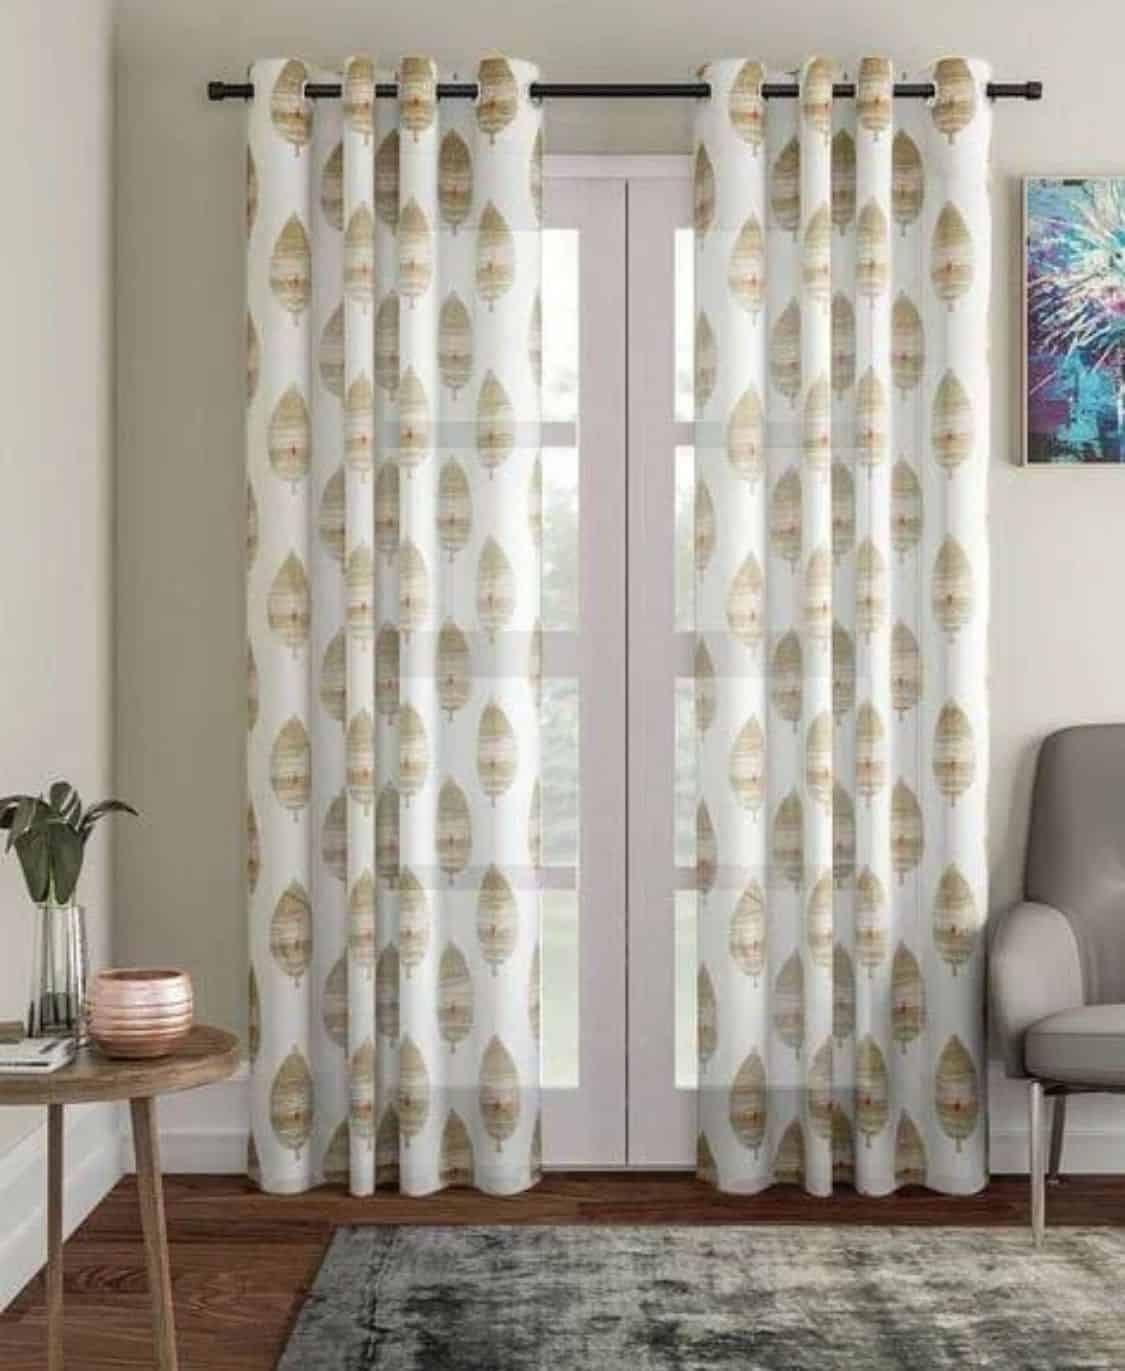 Printed white curtains